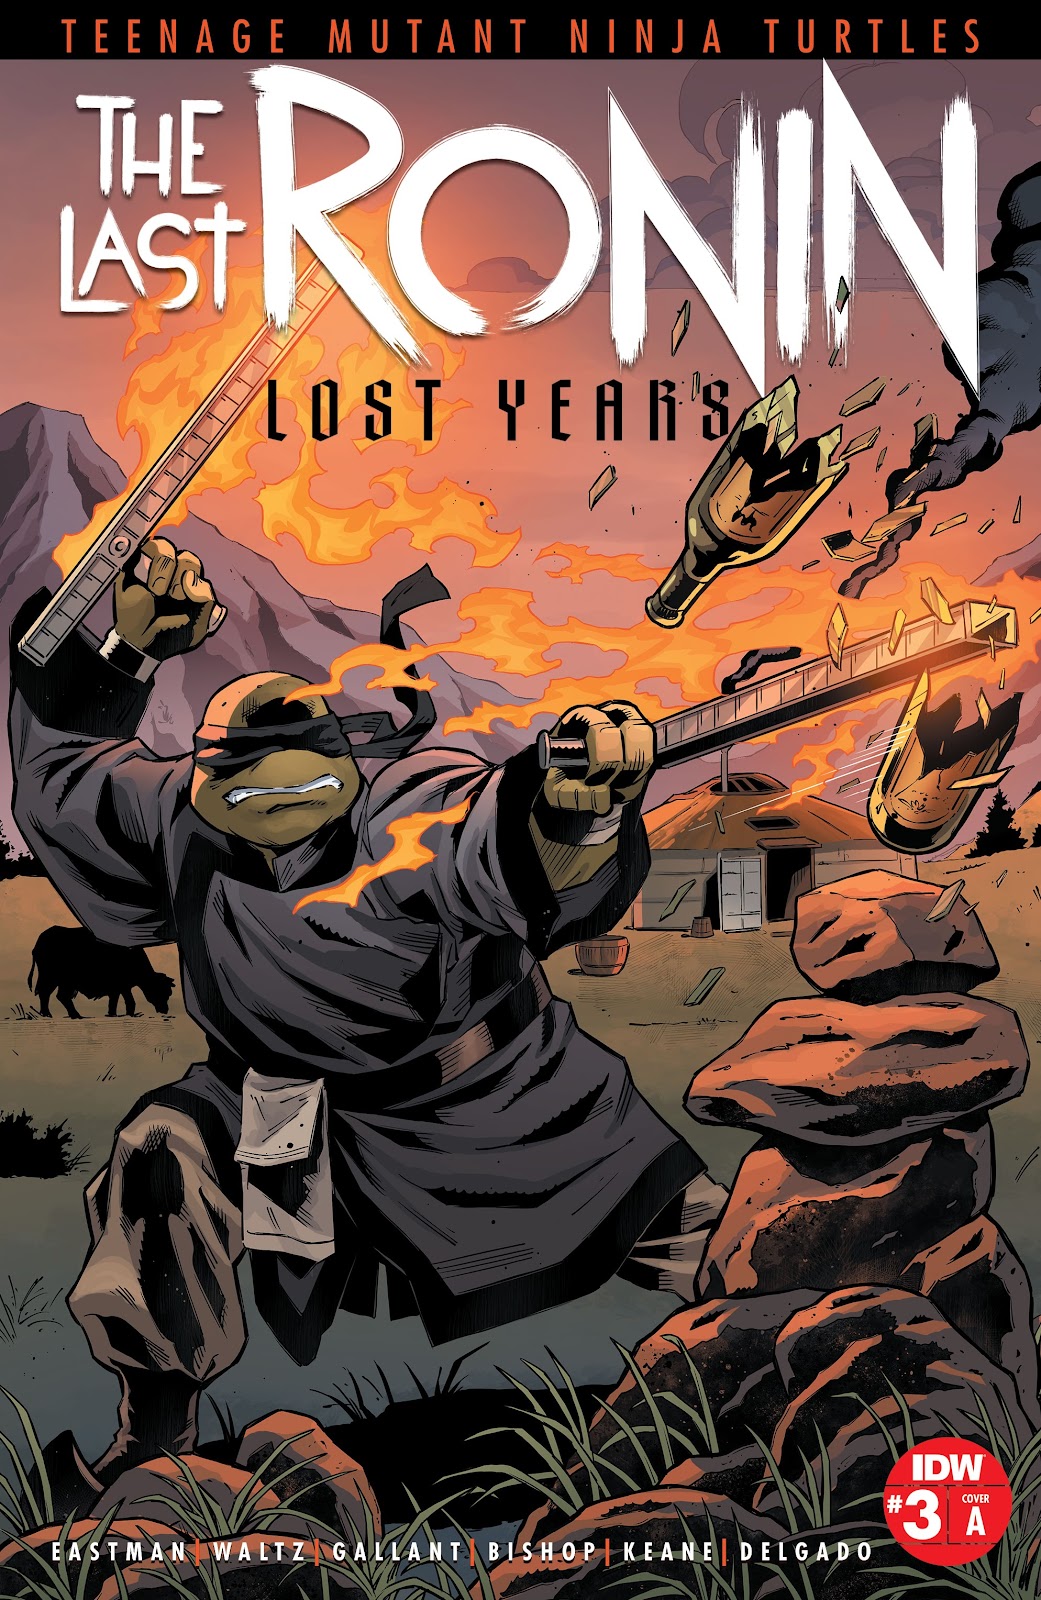 Teenage Mutant Ninja Turtles: The Last Ronin - The Lost Years issue 3 - Page 1